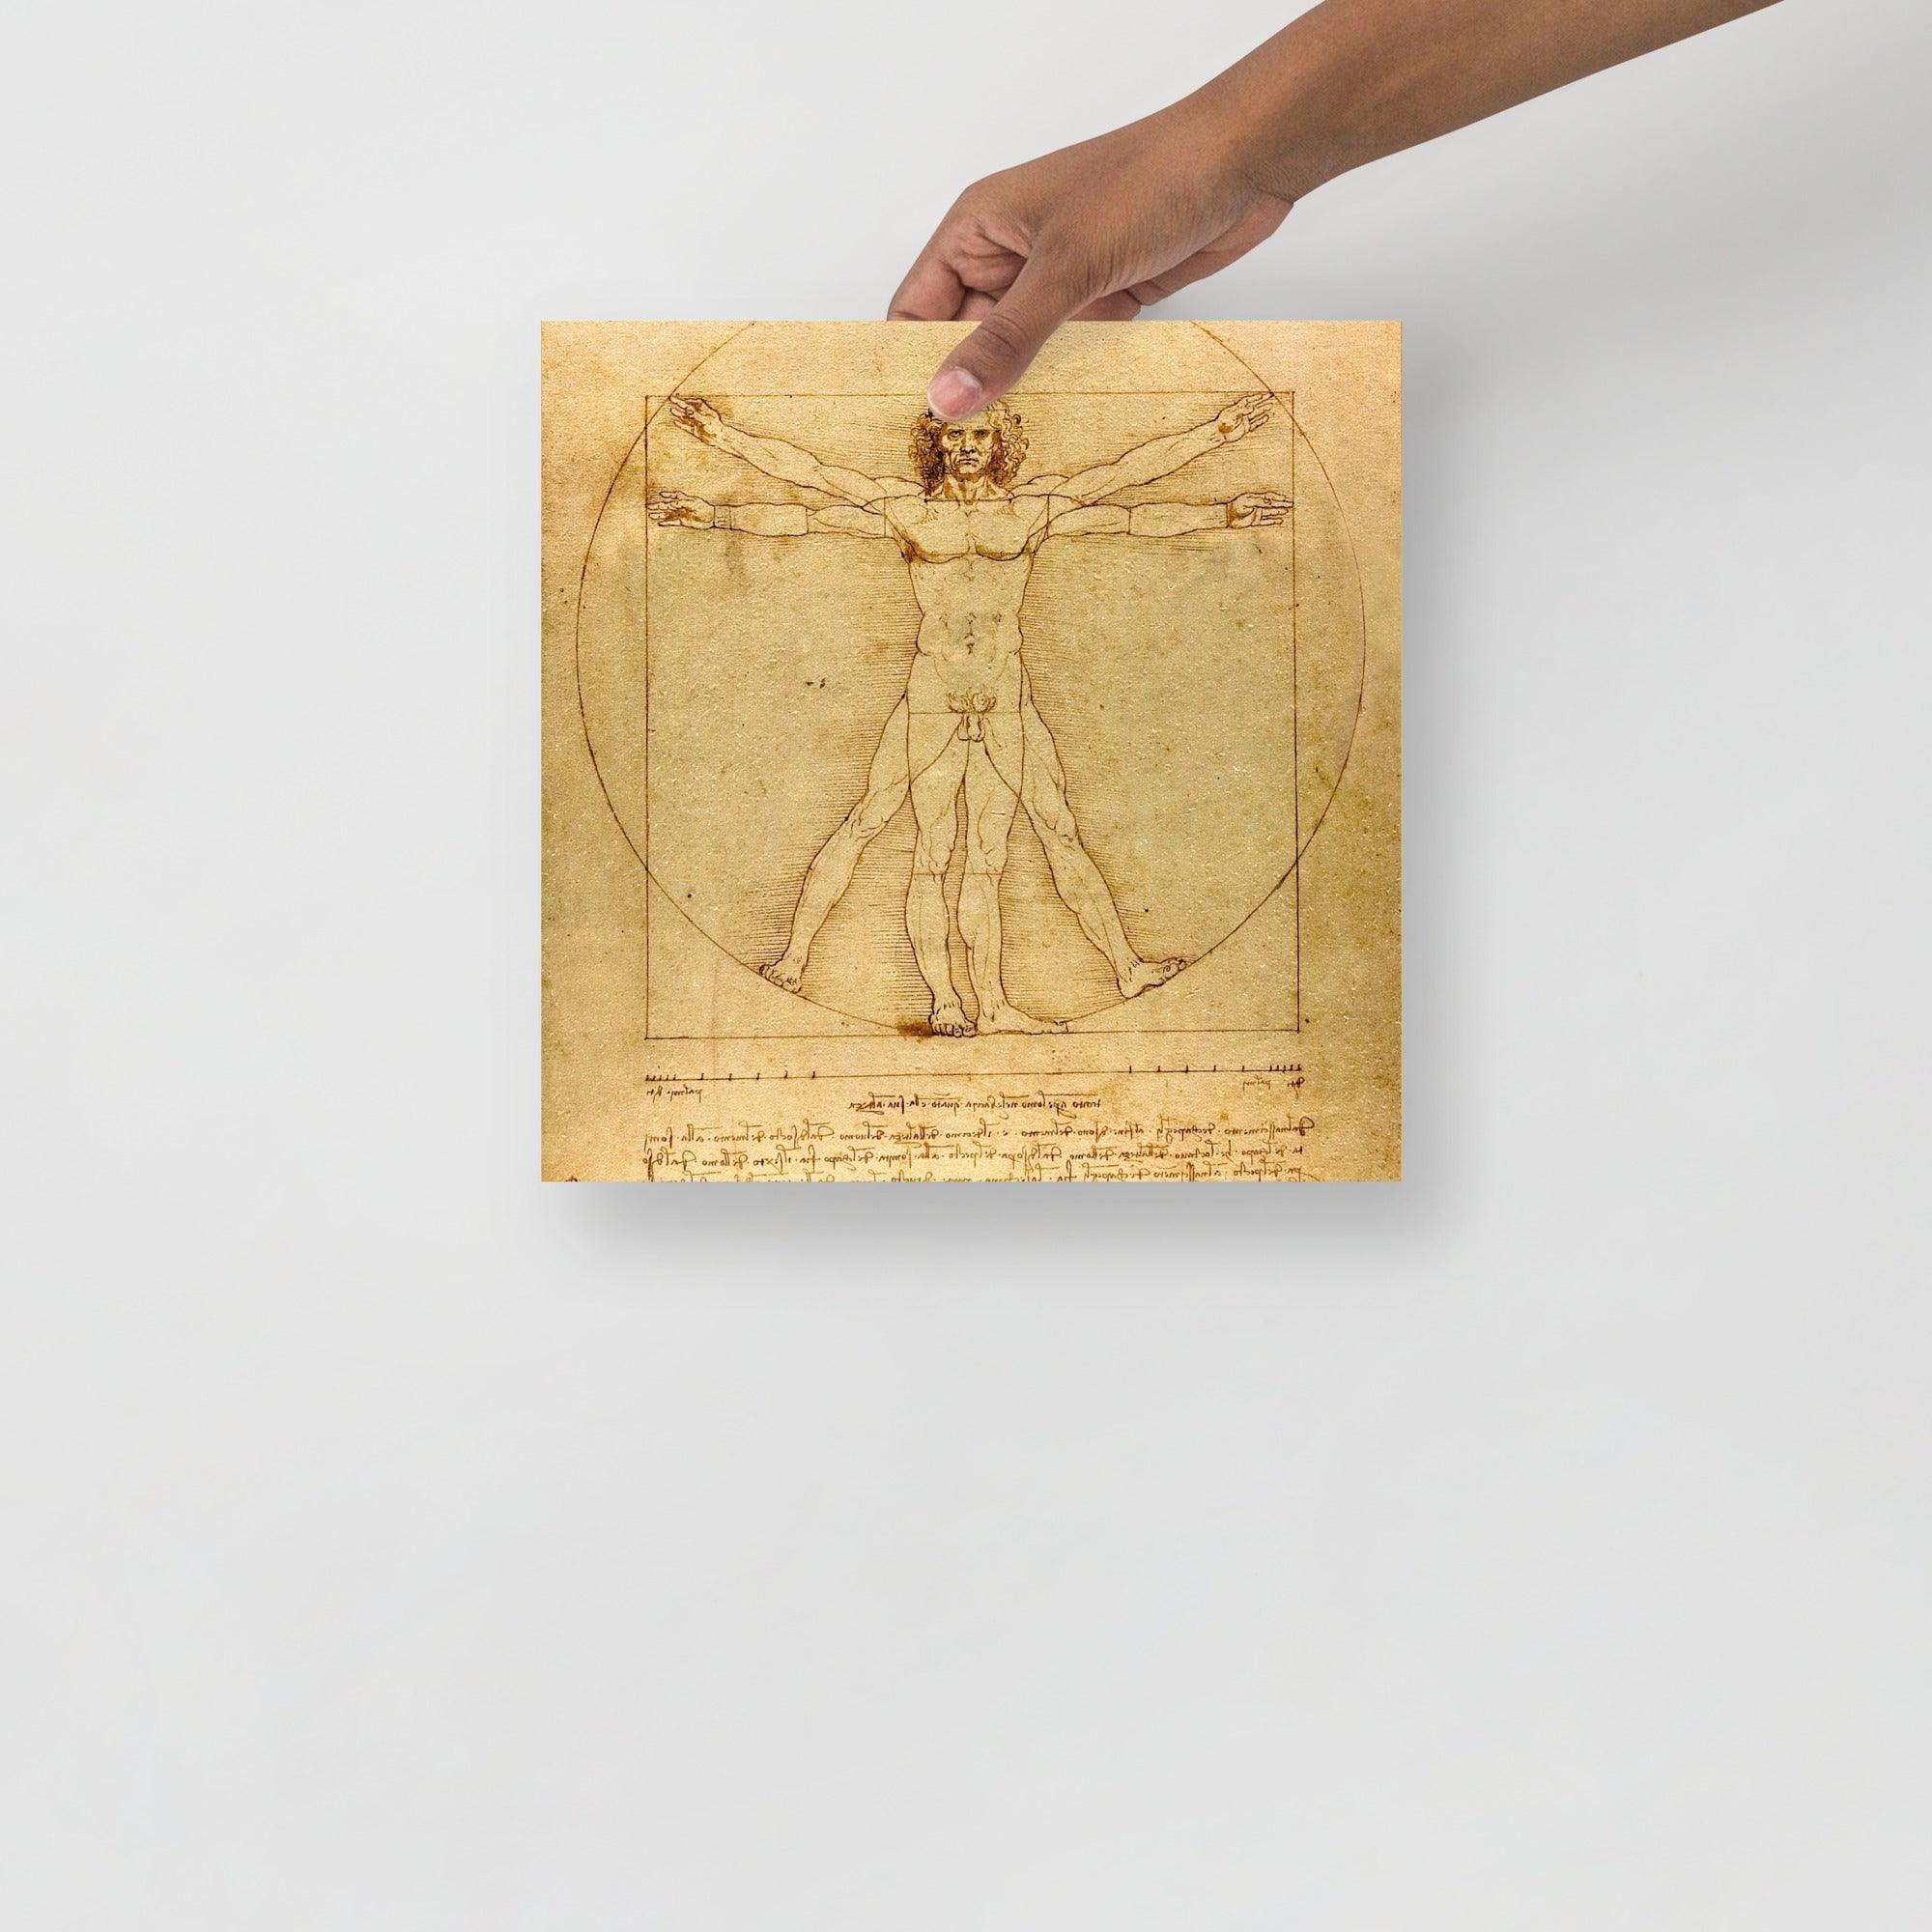 A Vitruvian Man by Leonardo da Vinci poster on a plain backdrop in size 12x12”.